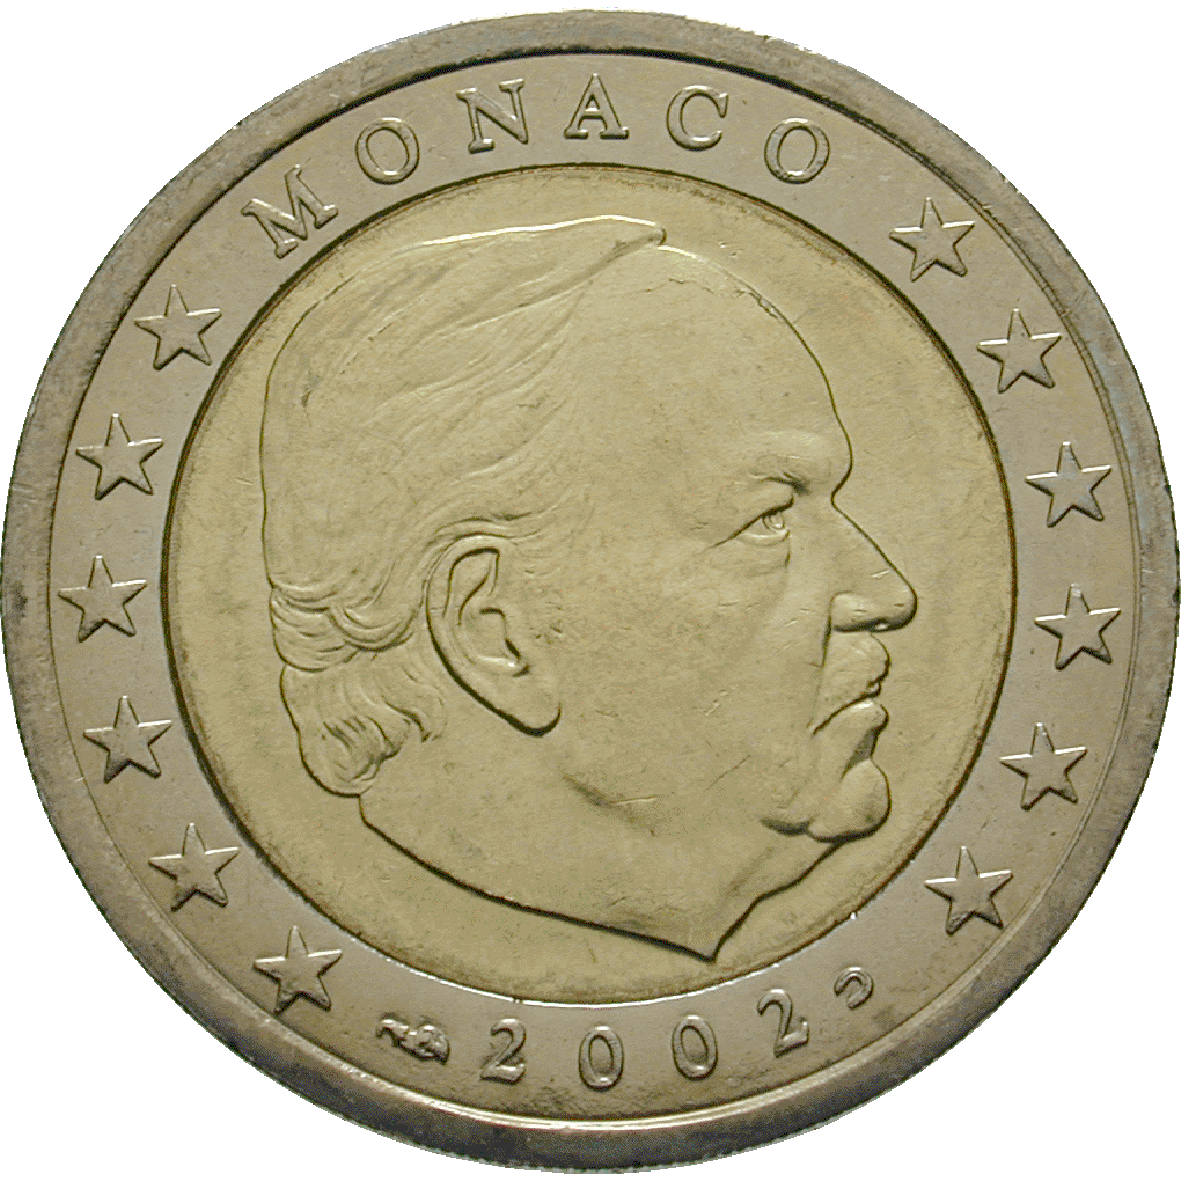 Principality of Monaco, Rainer III, 2 Euros 2002 (reverse)